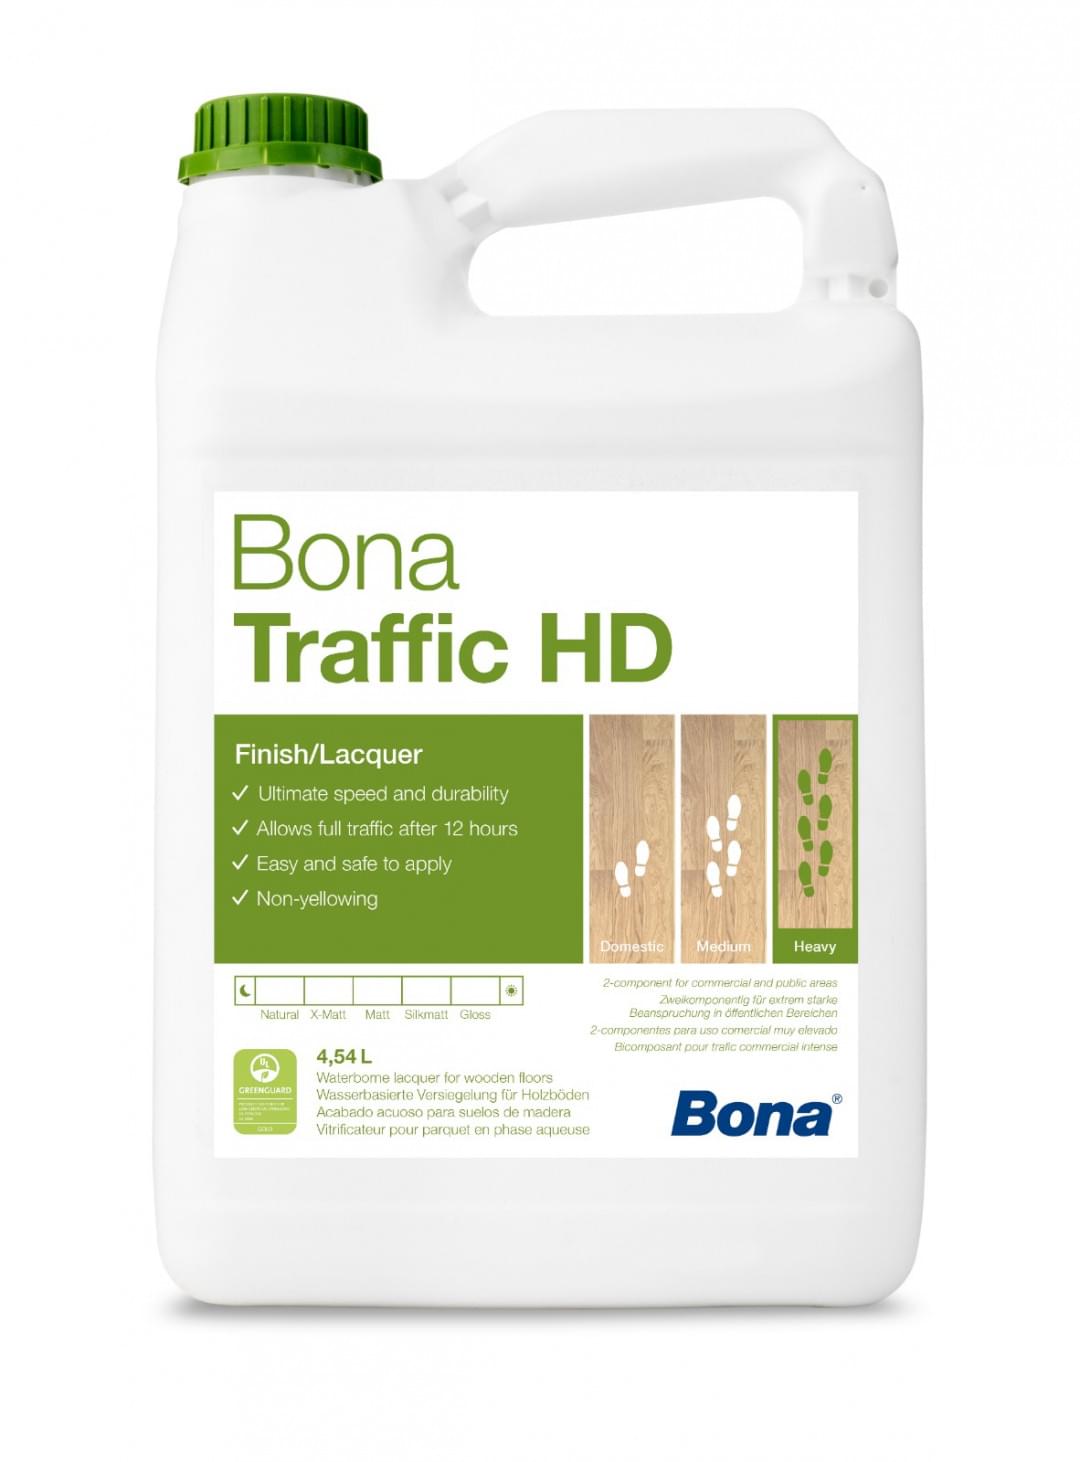 Bona Traffic HD from Bona